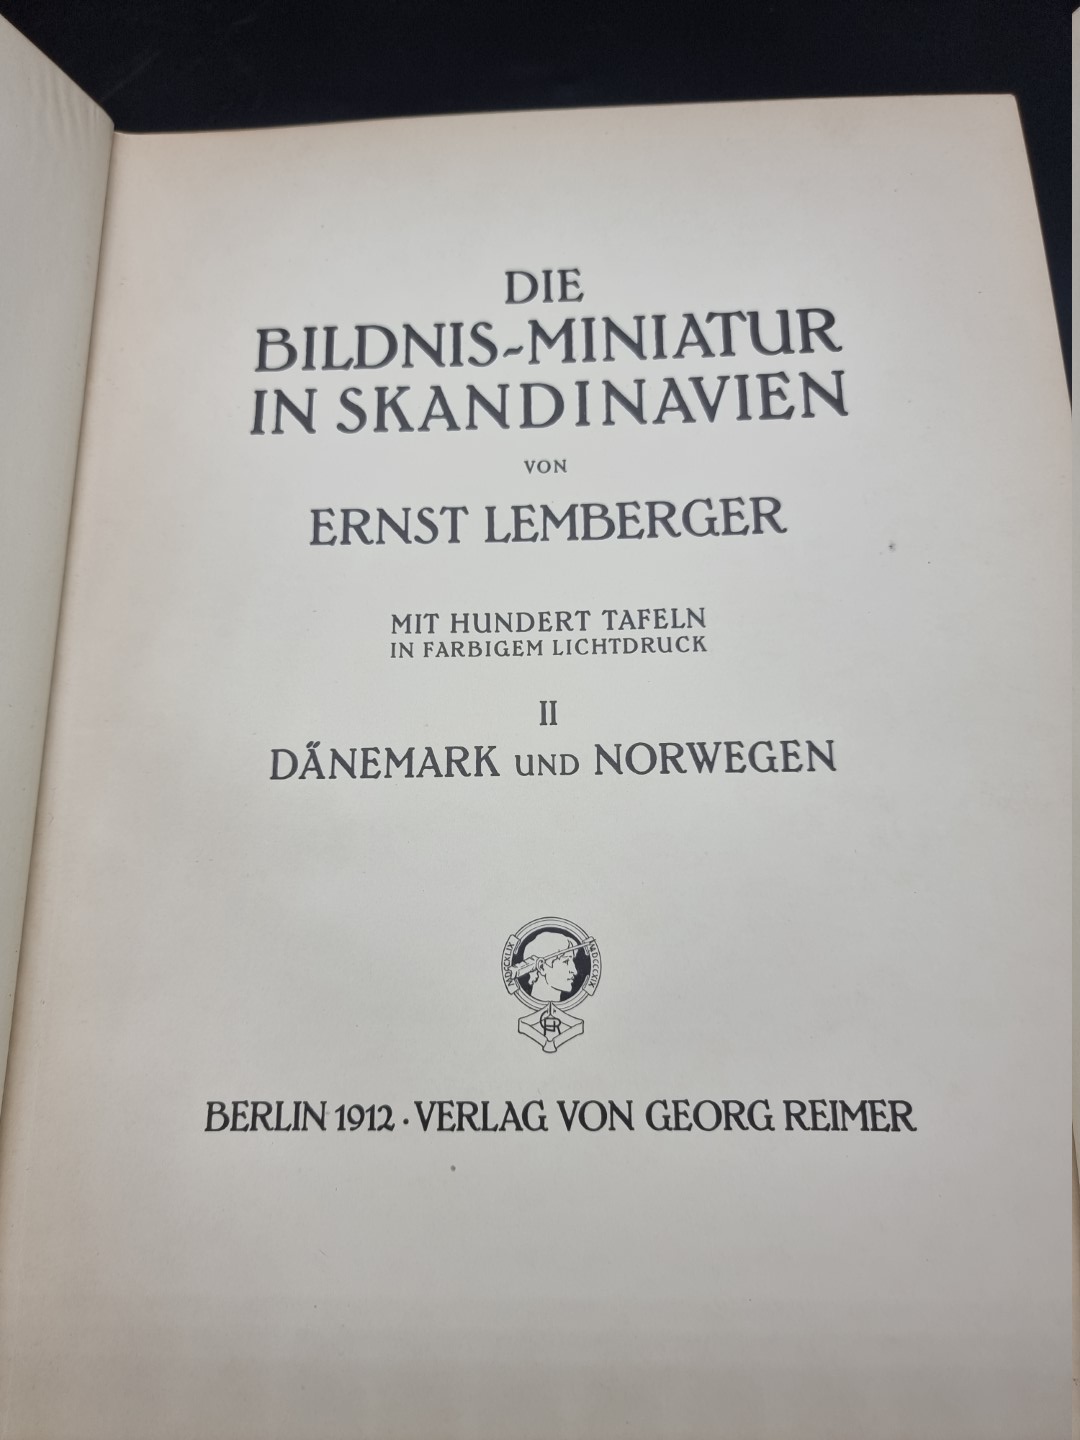 SCANDINAVIAN MINIATURES: Lemberger (Ernst): 'Die Bildnis-Miniatur in Skandinavien': Berlin, 1912: - Image 10 of 11